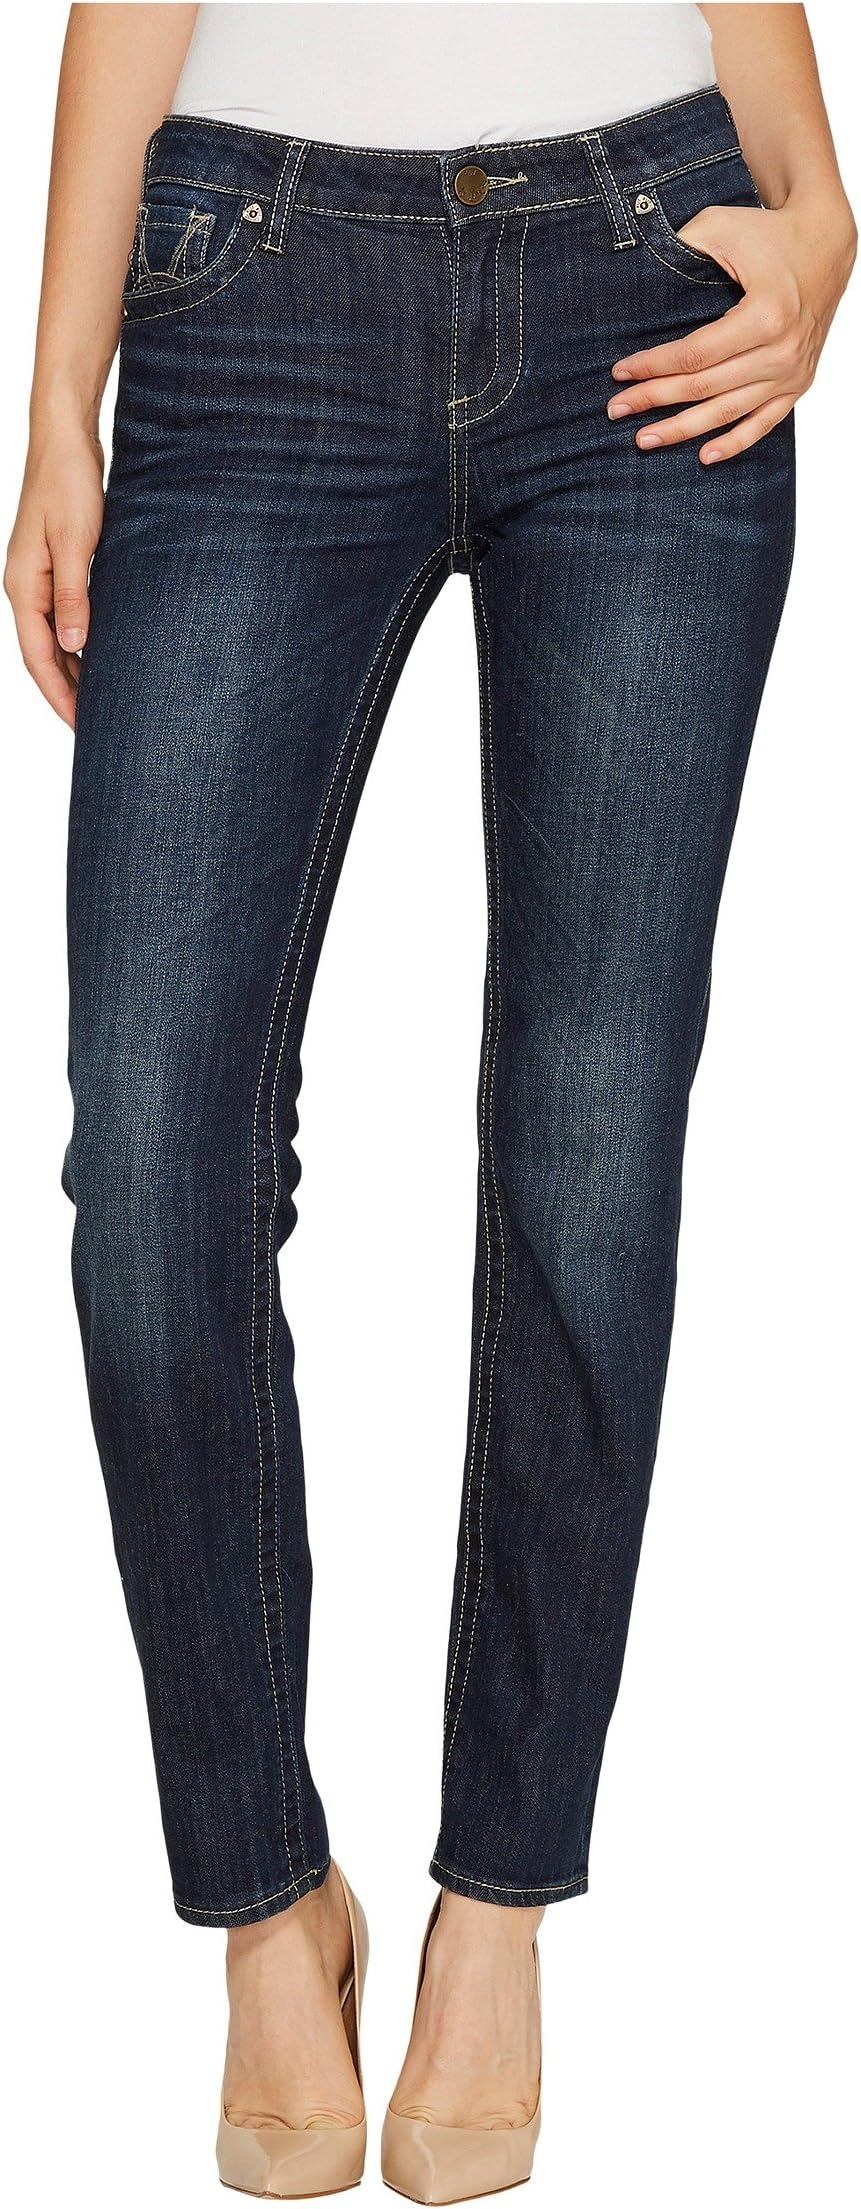 Джинсы Stevie Straight Leg Jeans KUT from the Kloth, цвет Wise Wash w/ Eur цена и фото